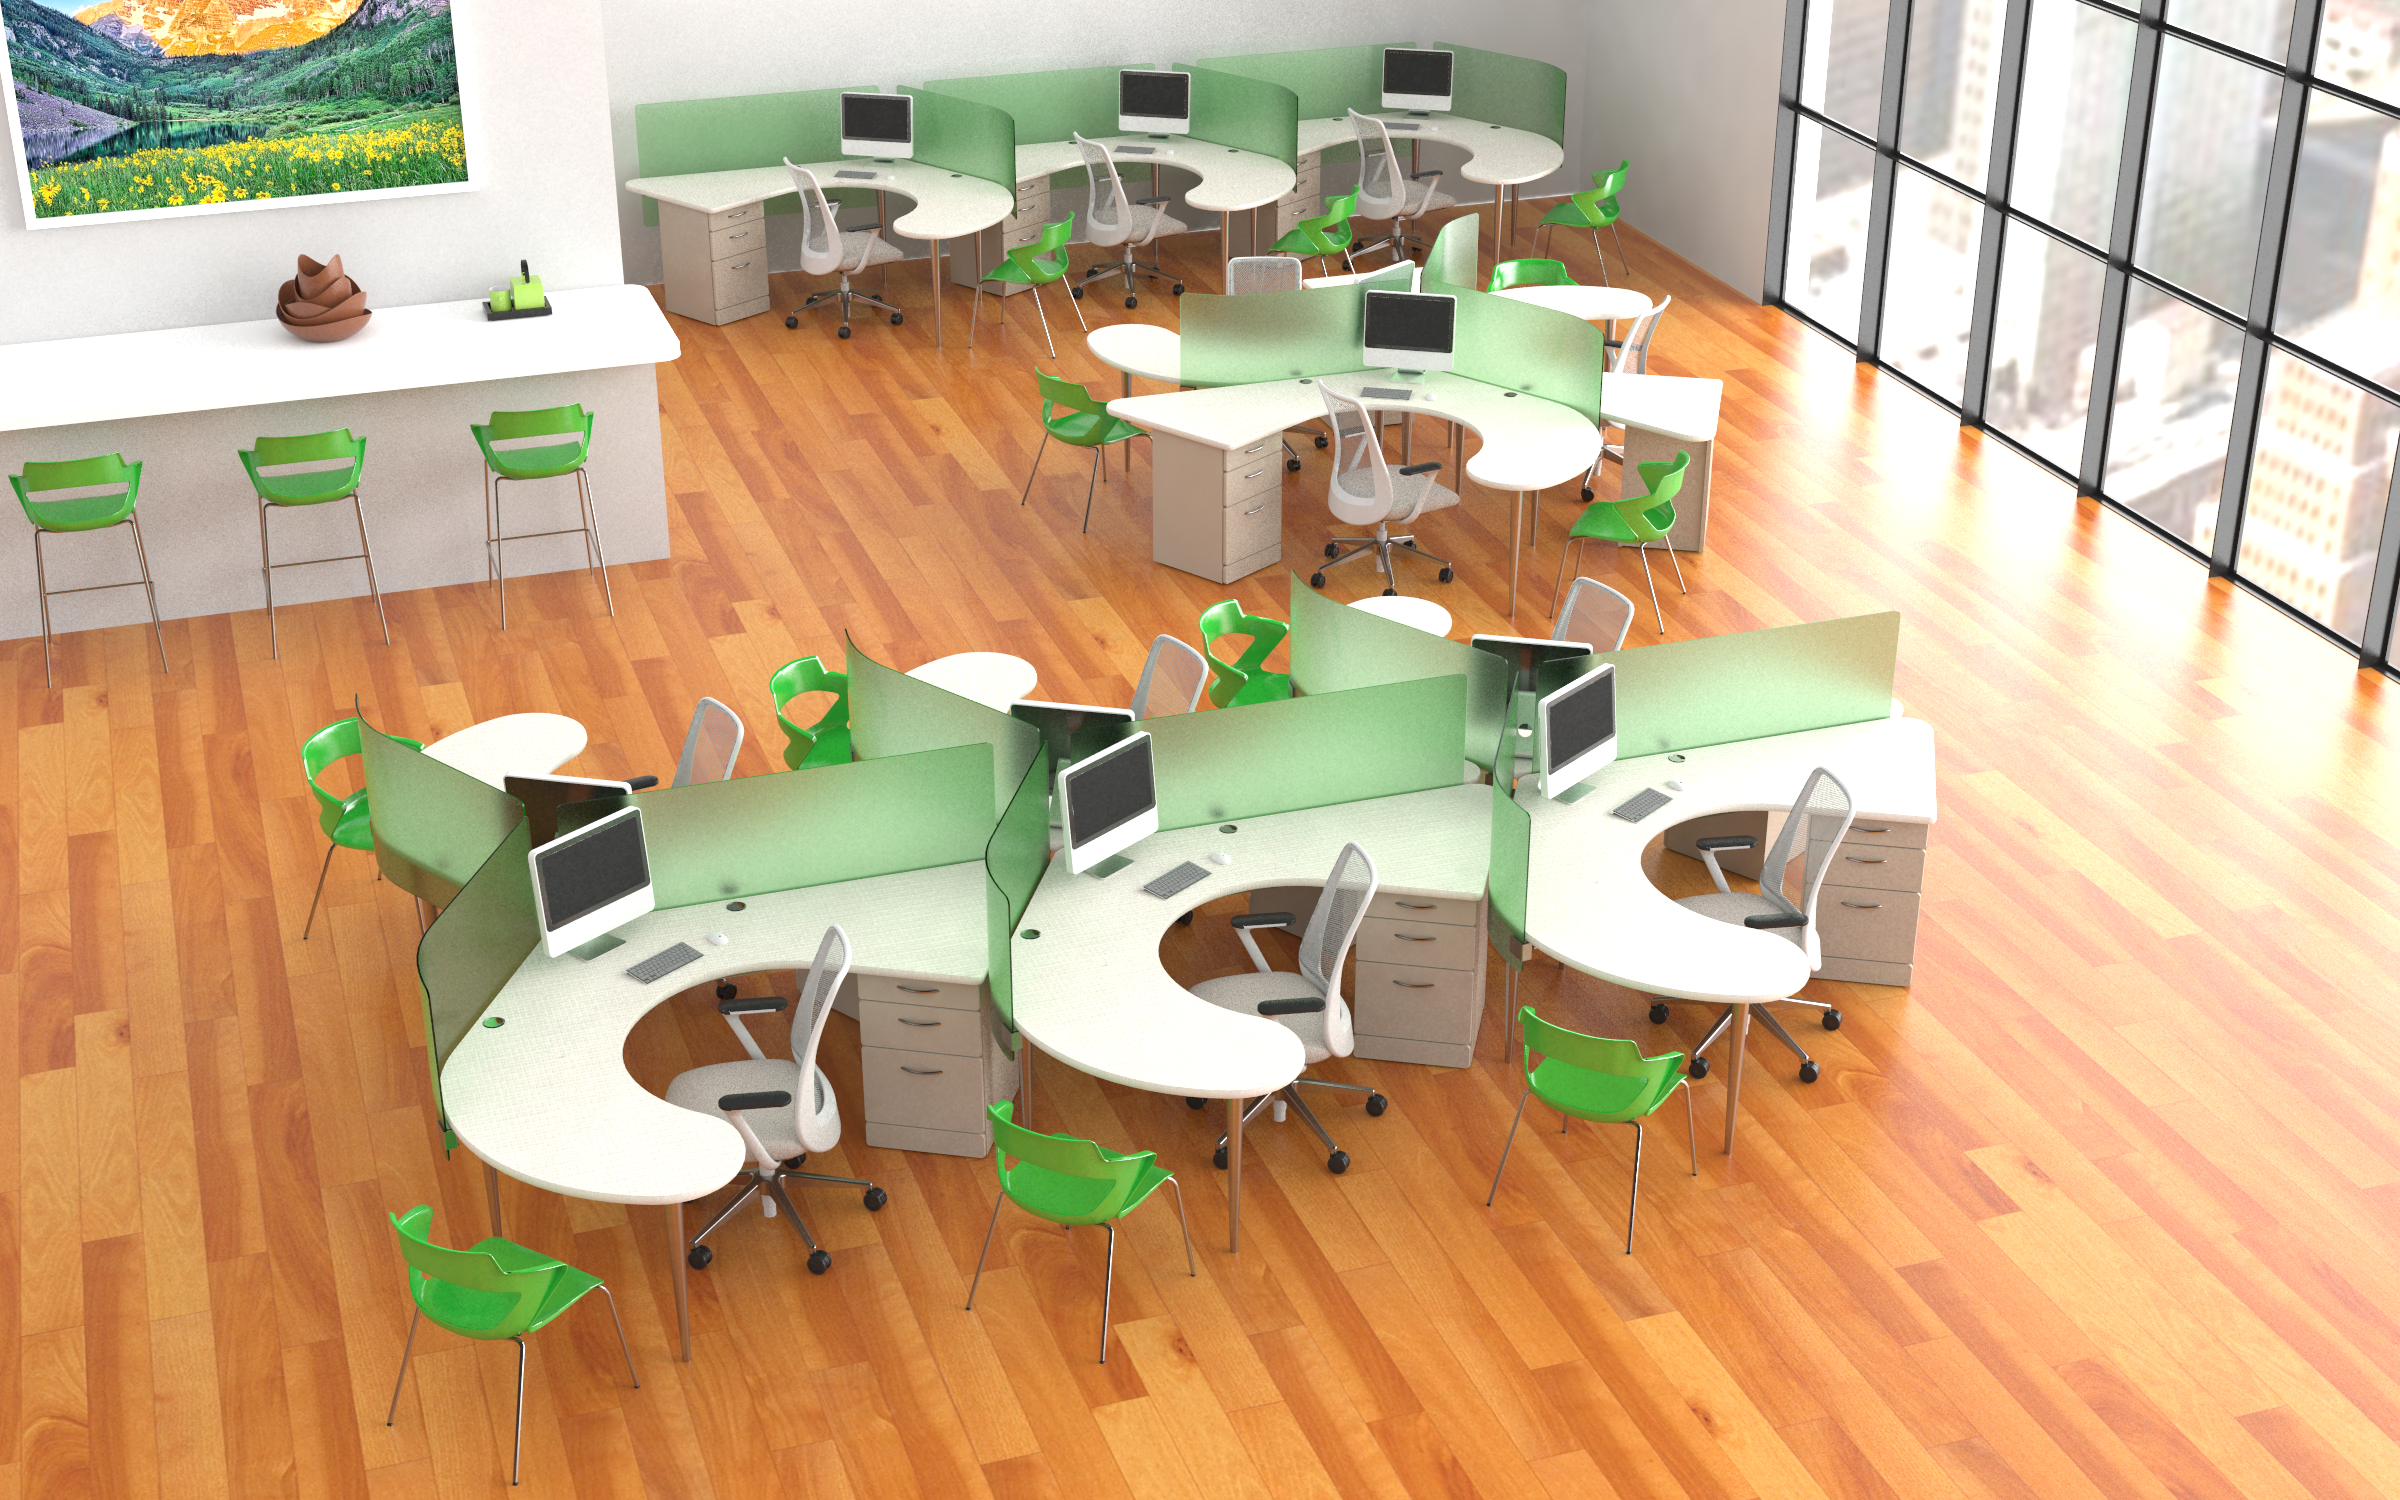 Increase Productivity Through an Open Office Floor Plan